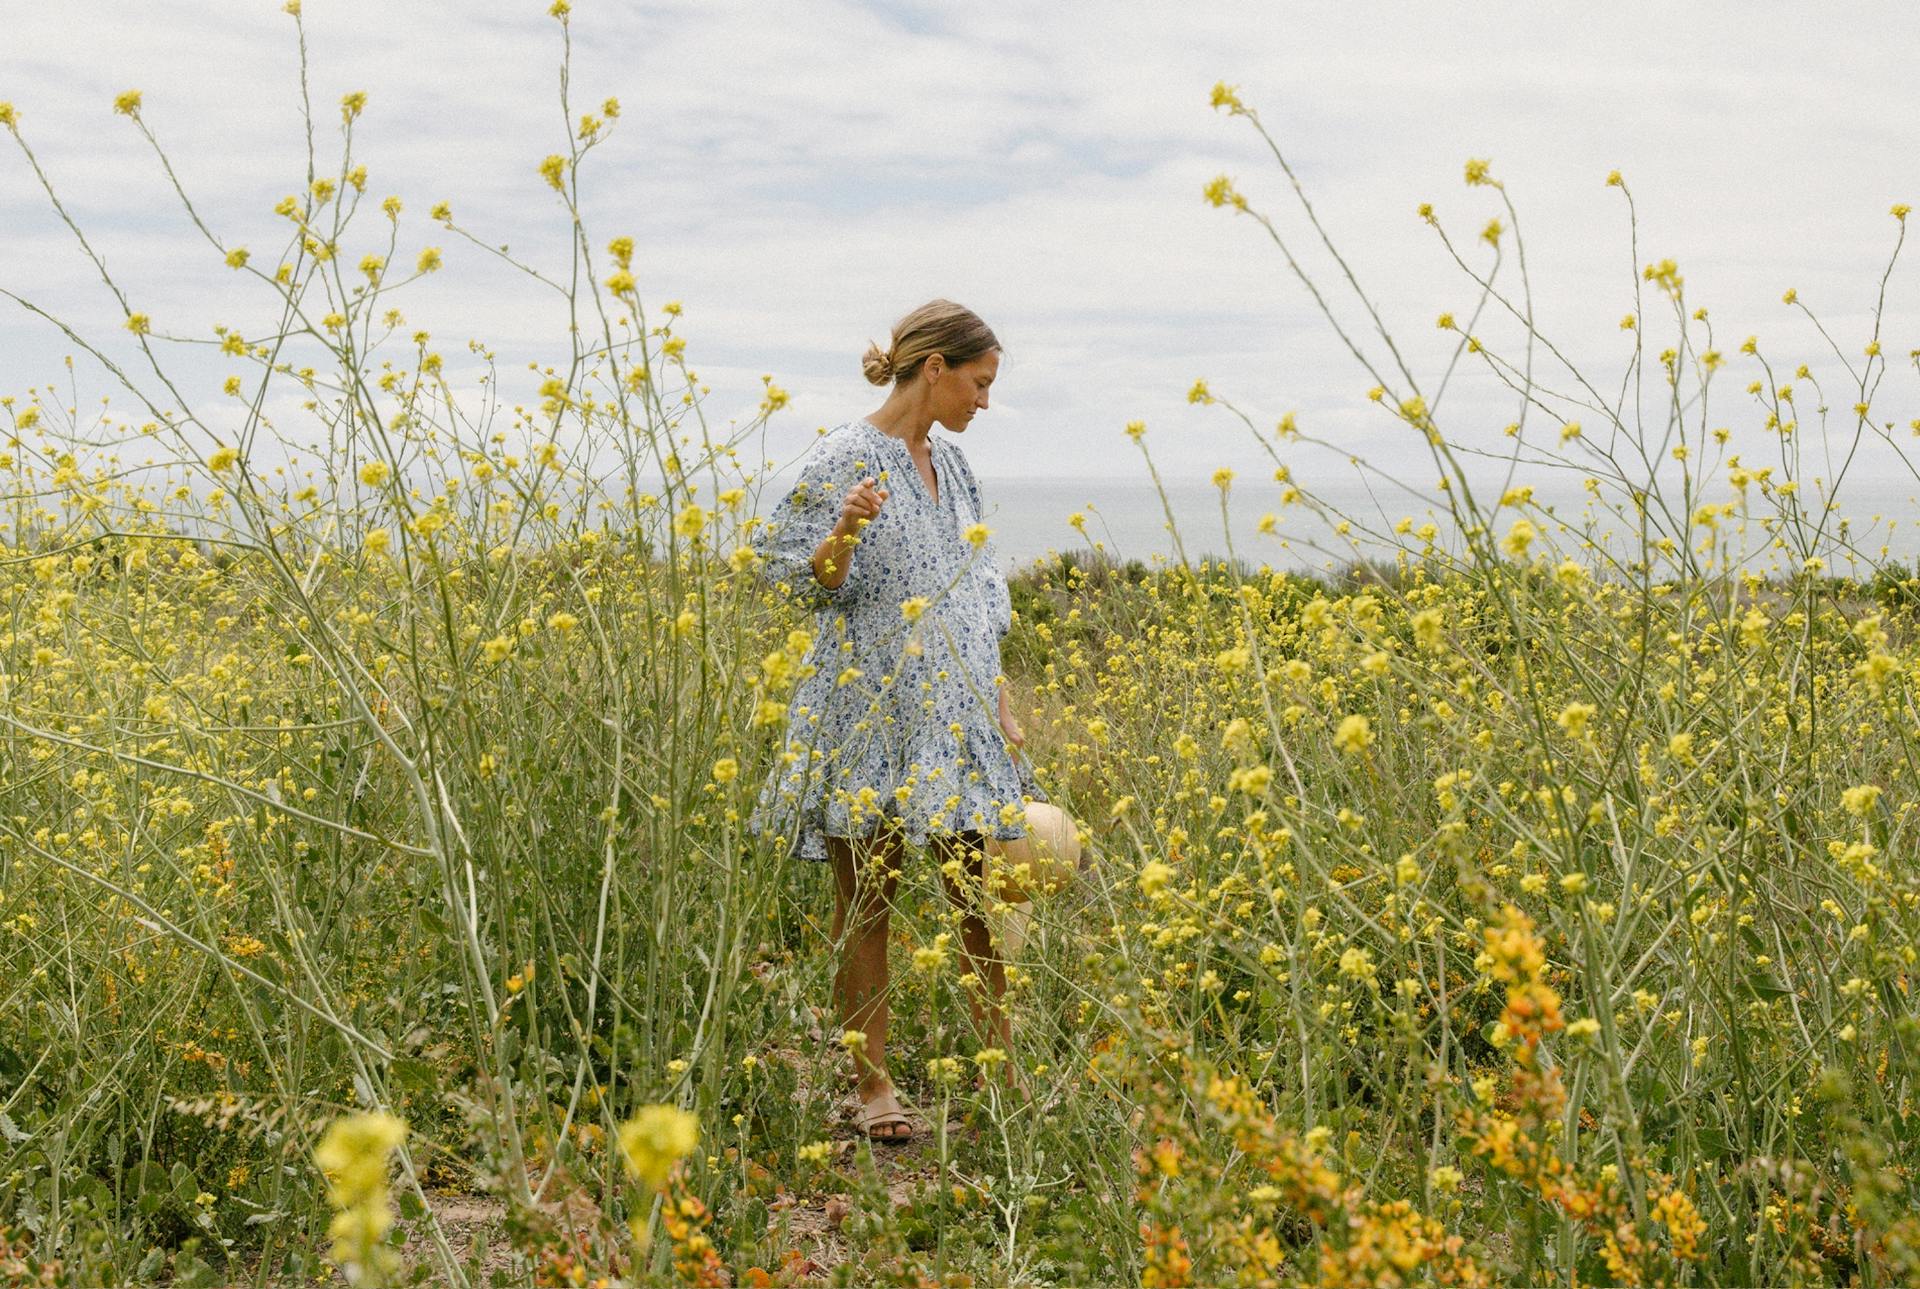 Julie Pointer Adams walks in an overgrown field